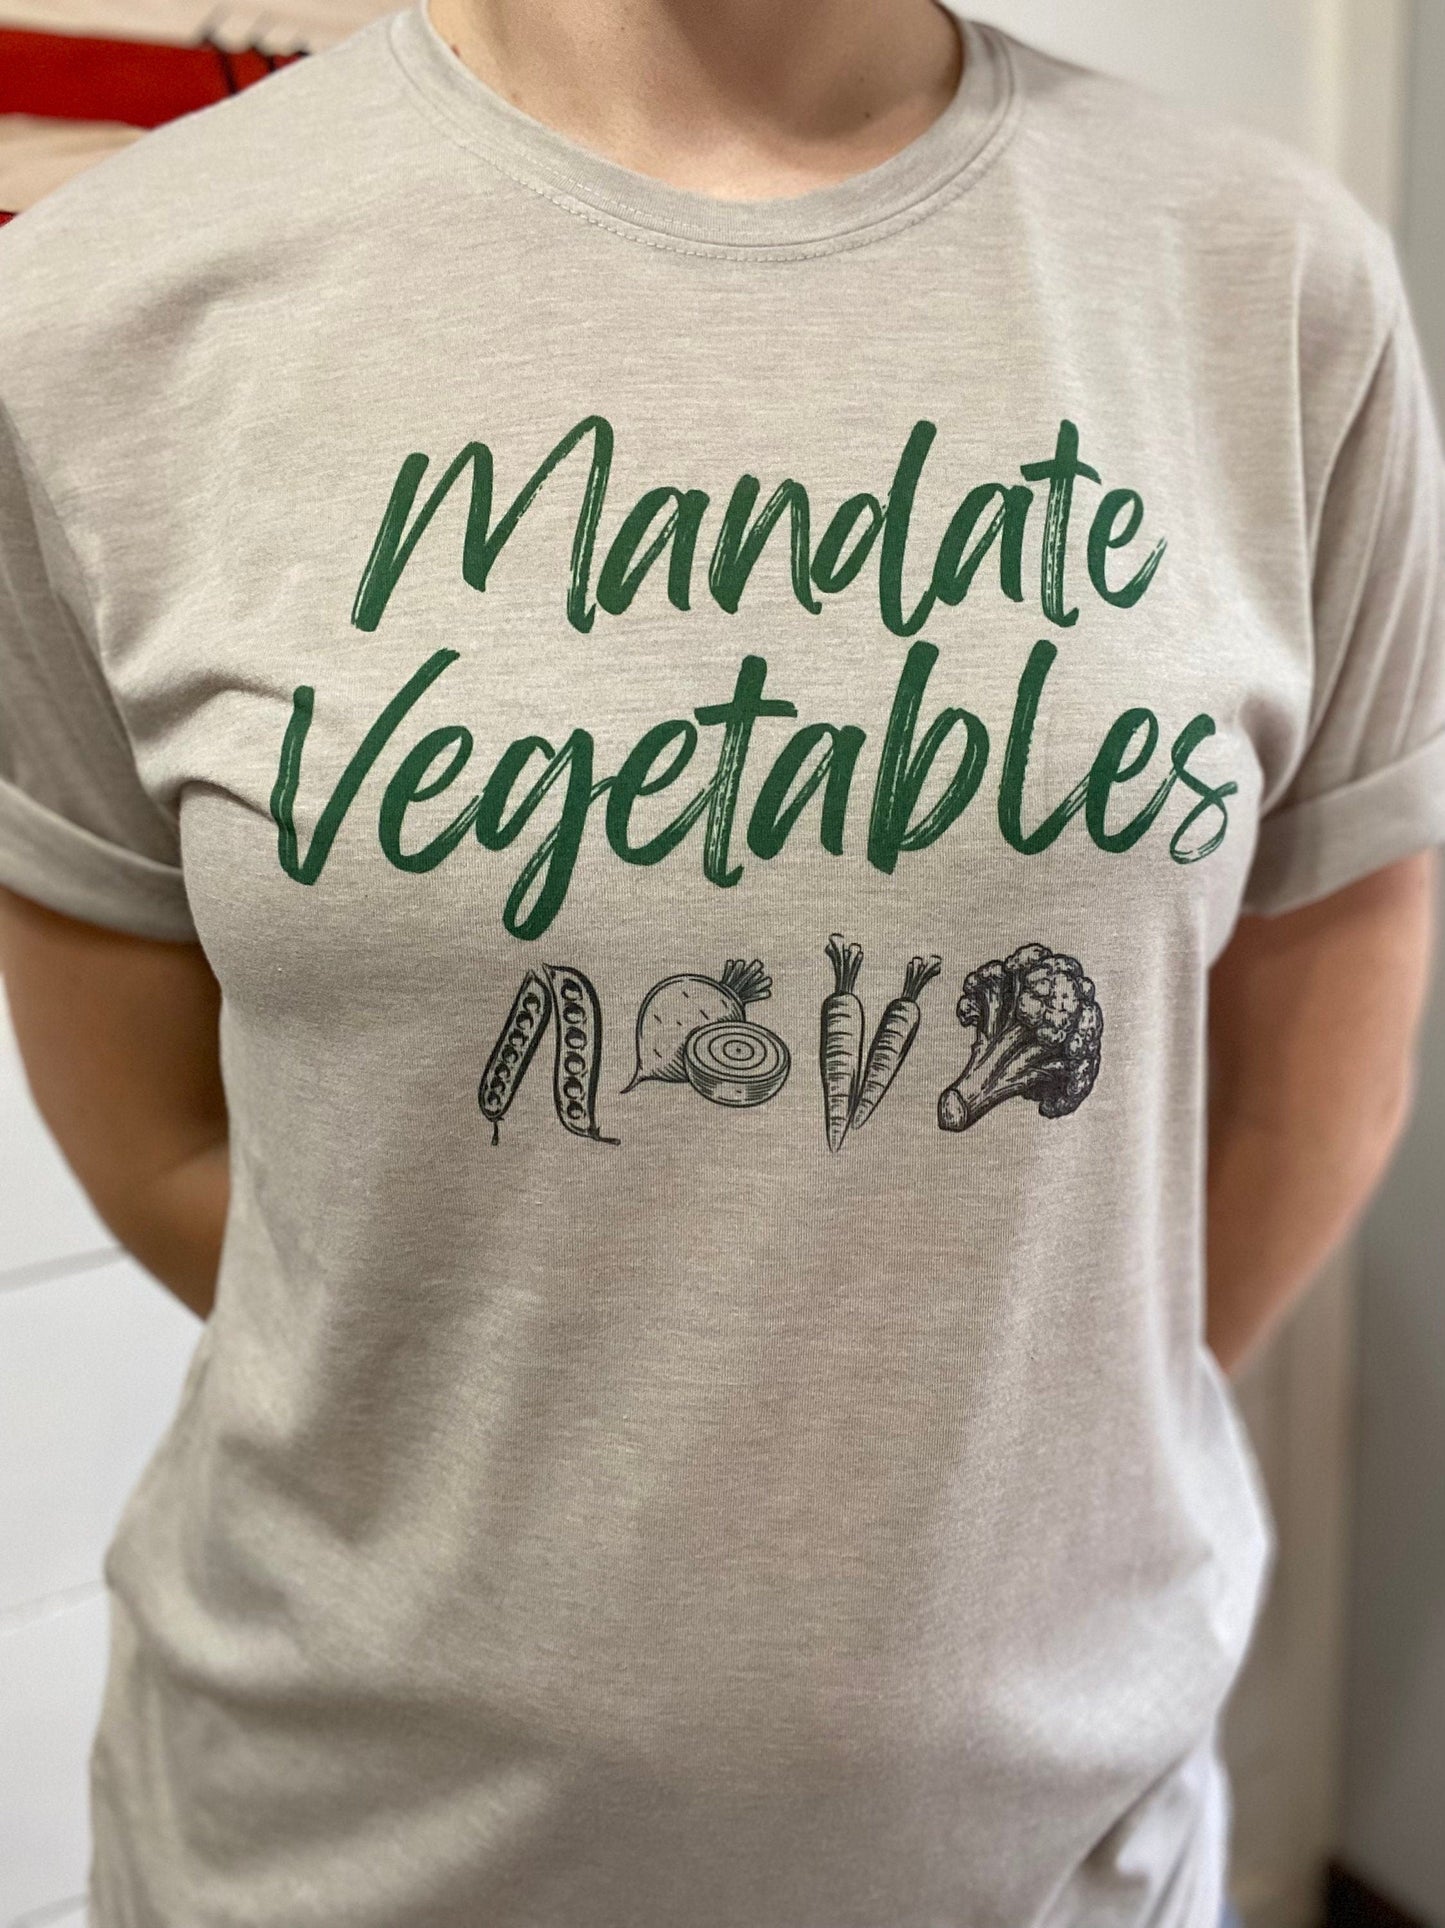 SALE - Mandate Vegetables